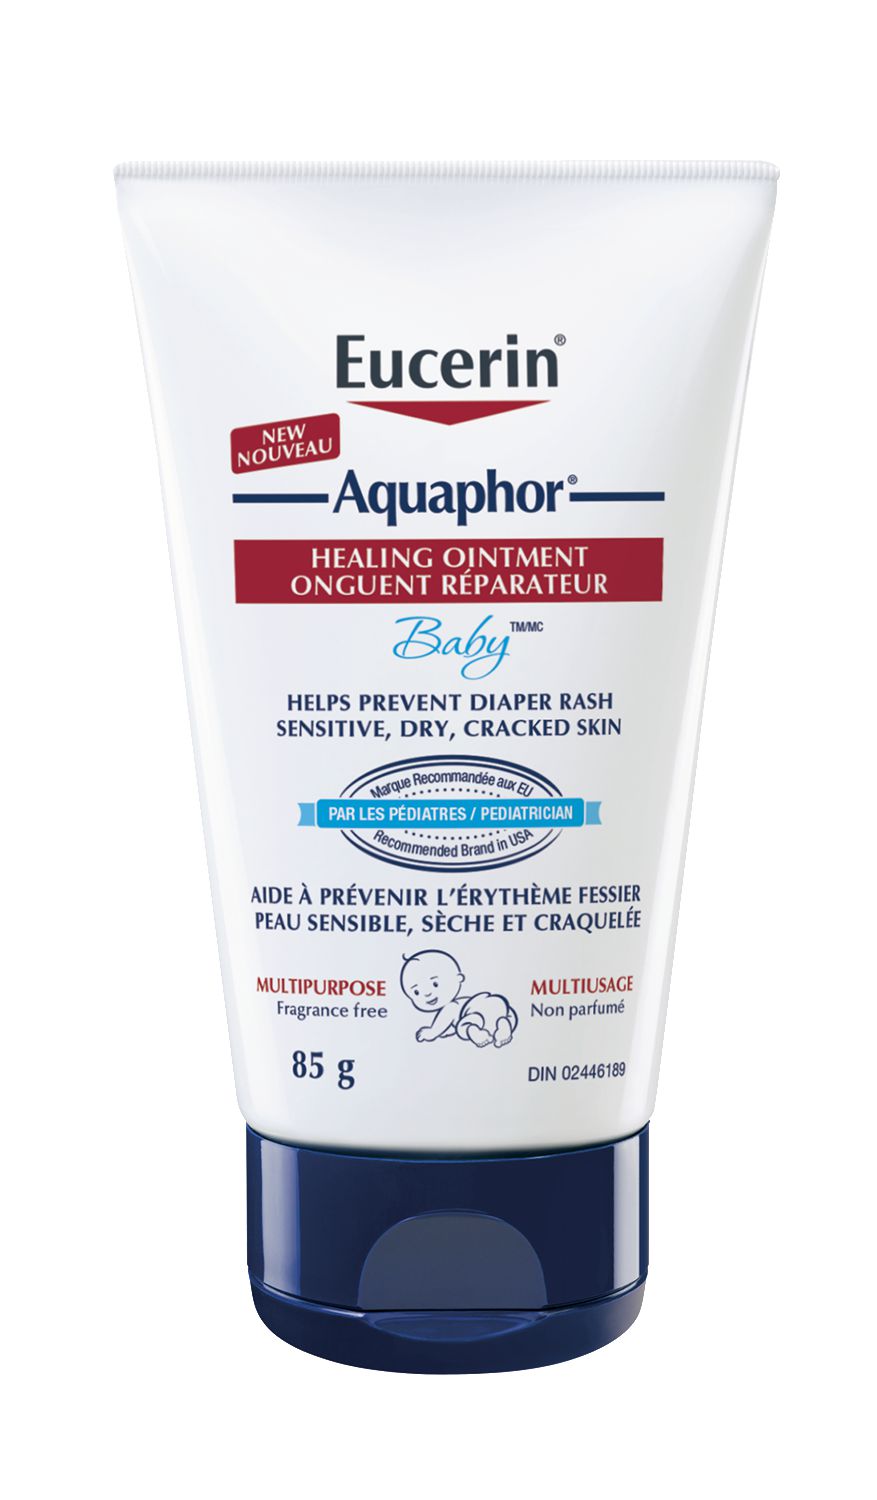 Eucerin Aquaphor Baby Healing Ointment | art-kk.com